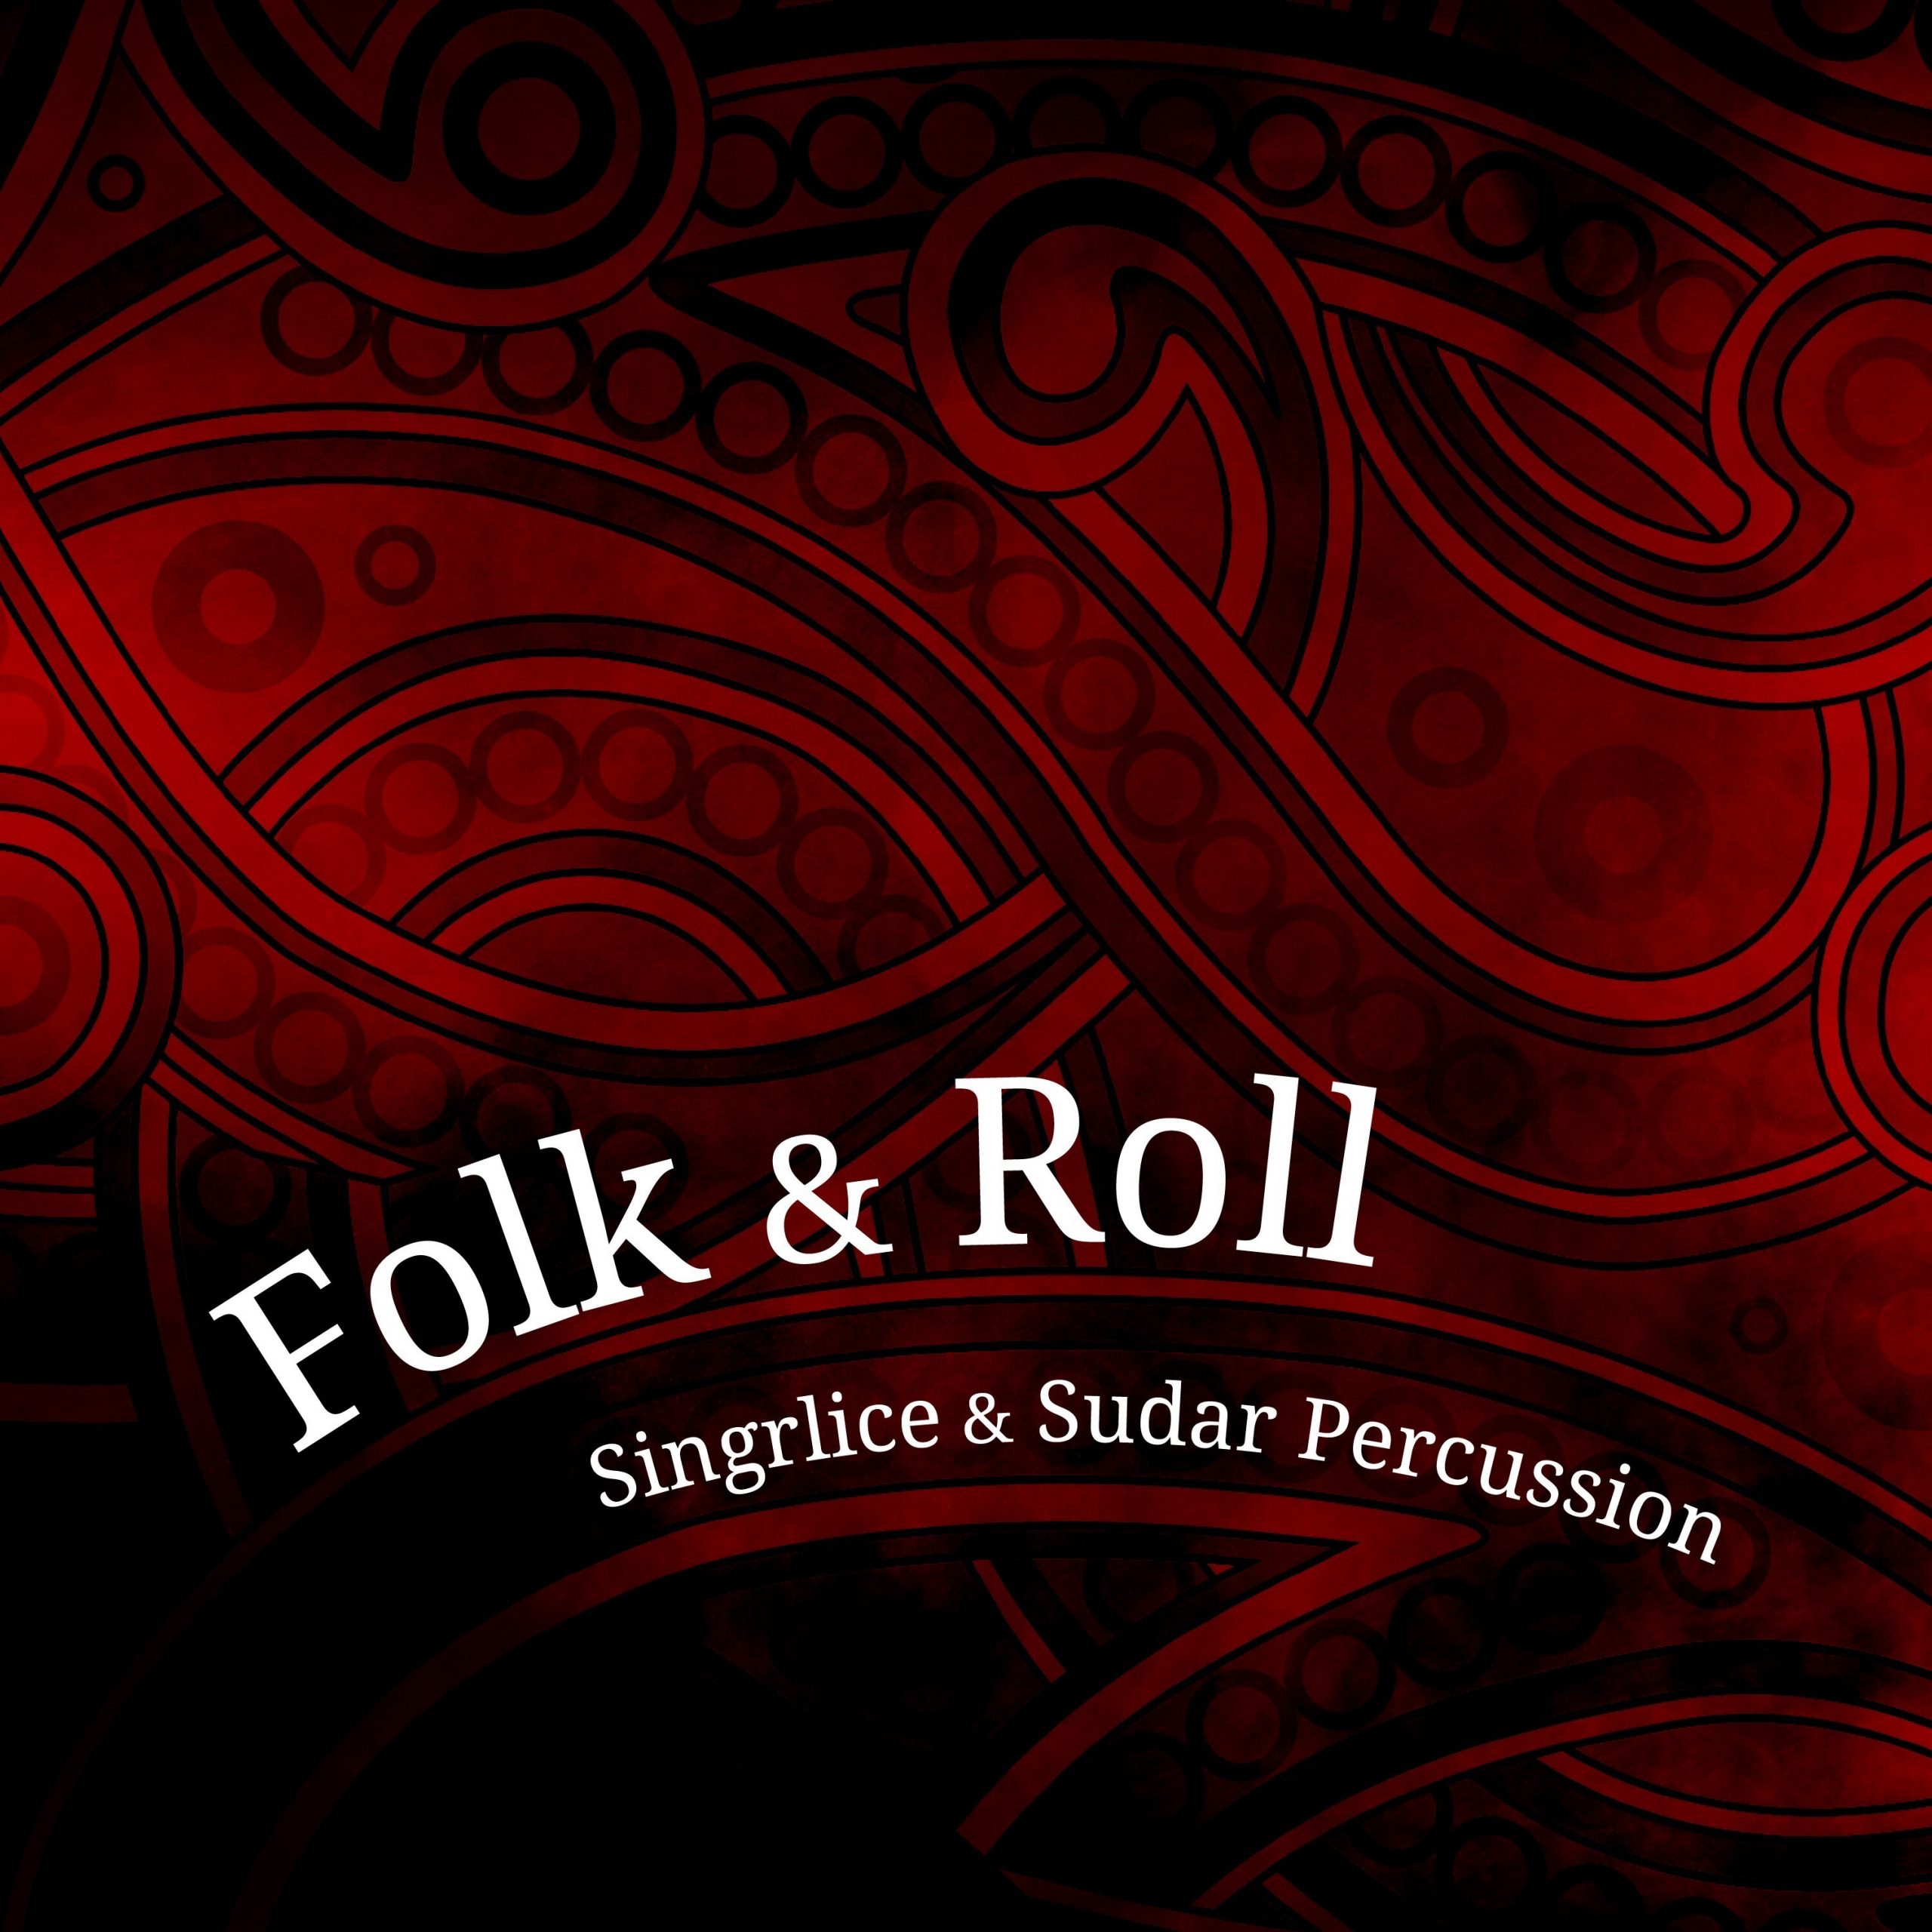 Sjajna world music suradnja Singrlica i Sudar Percussiona okrunjena albumom “Folk & Roll”